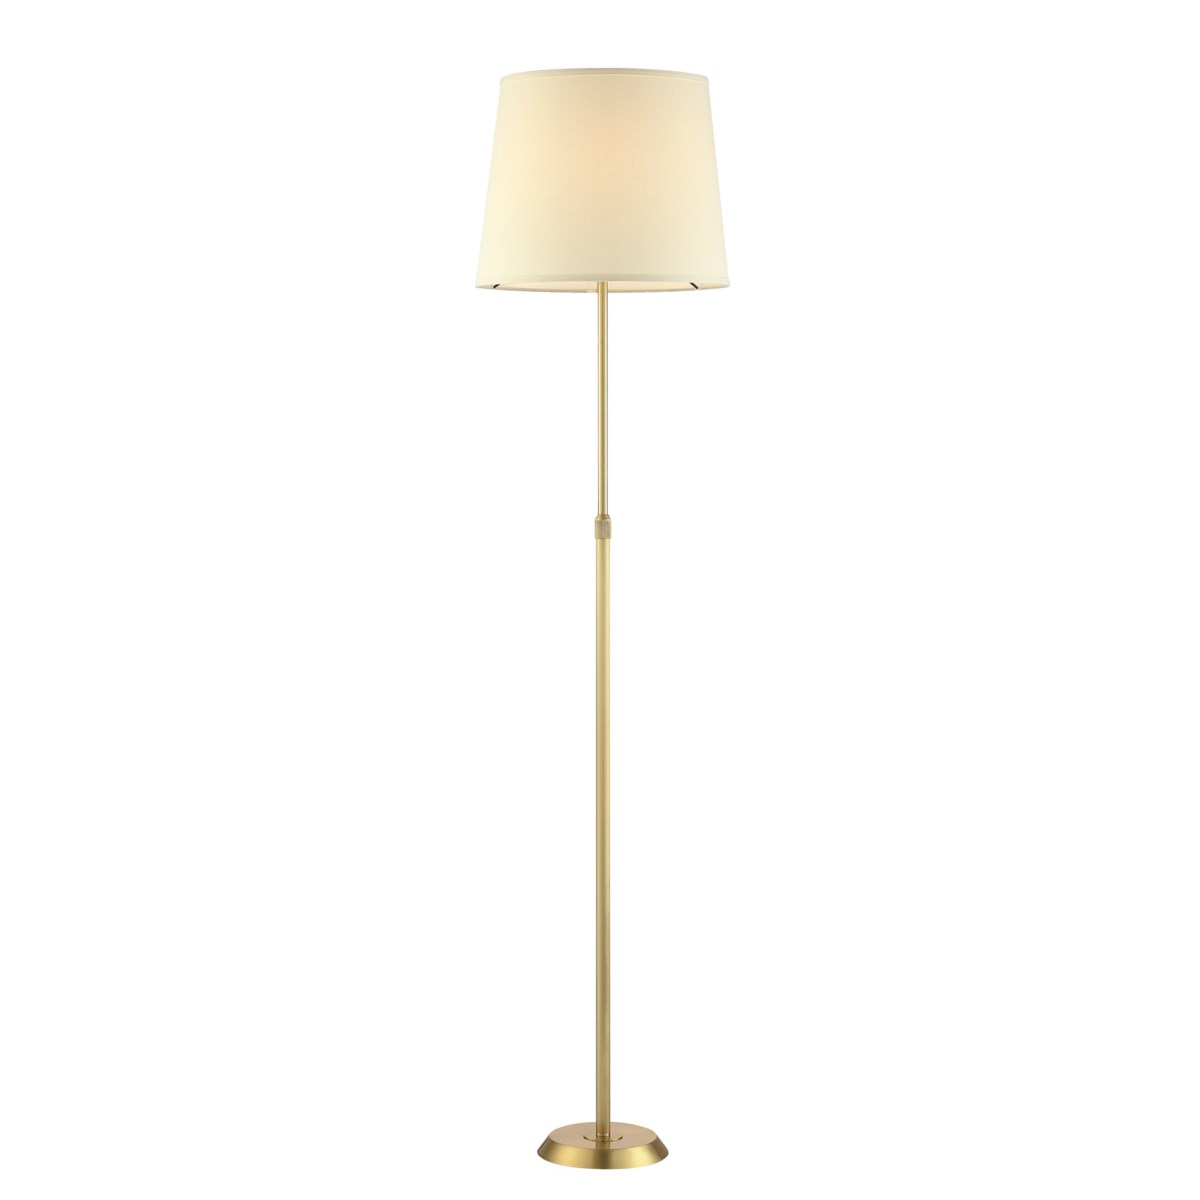 Attendorn Floor Lamp with Narrow Shade in Satin Brass